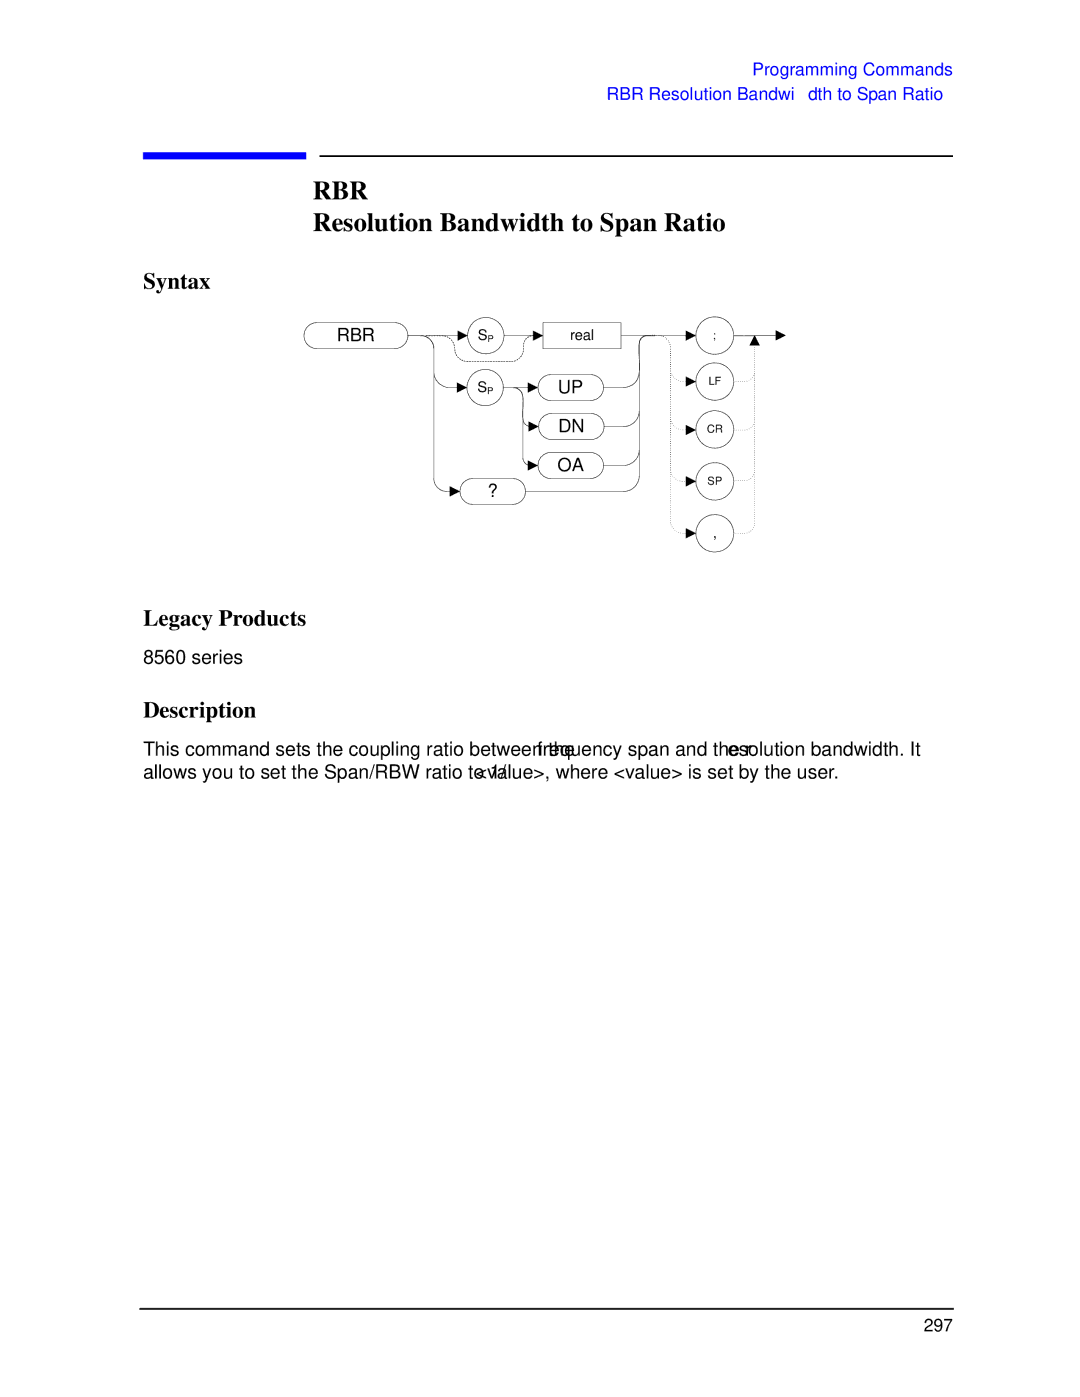 Agilent Technologies N9030a manual Rbr, Resolution Bandwidth to Span Ratio 